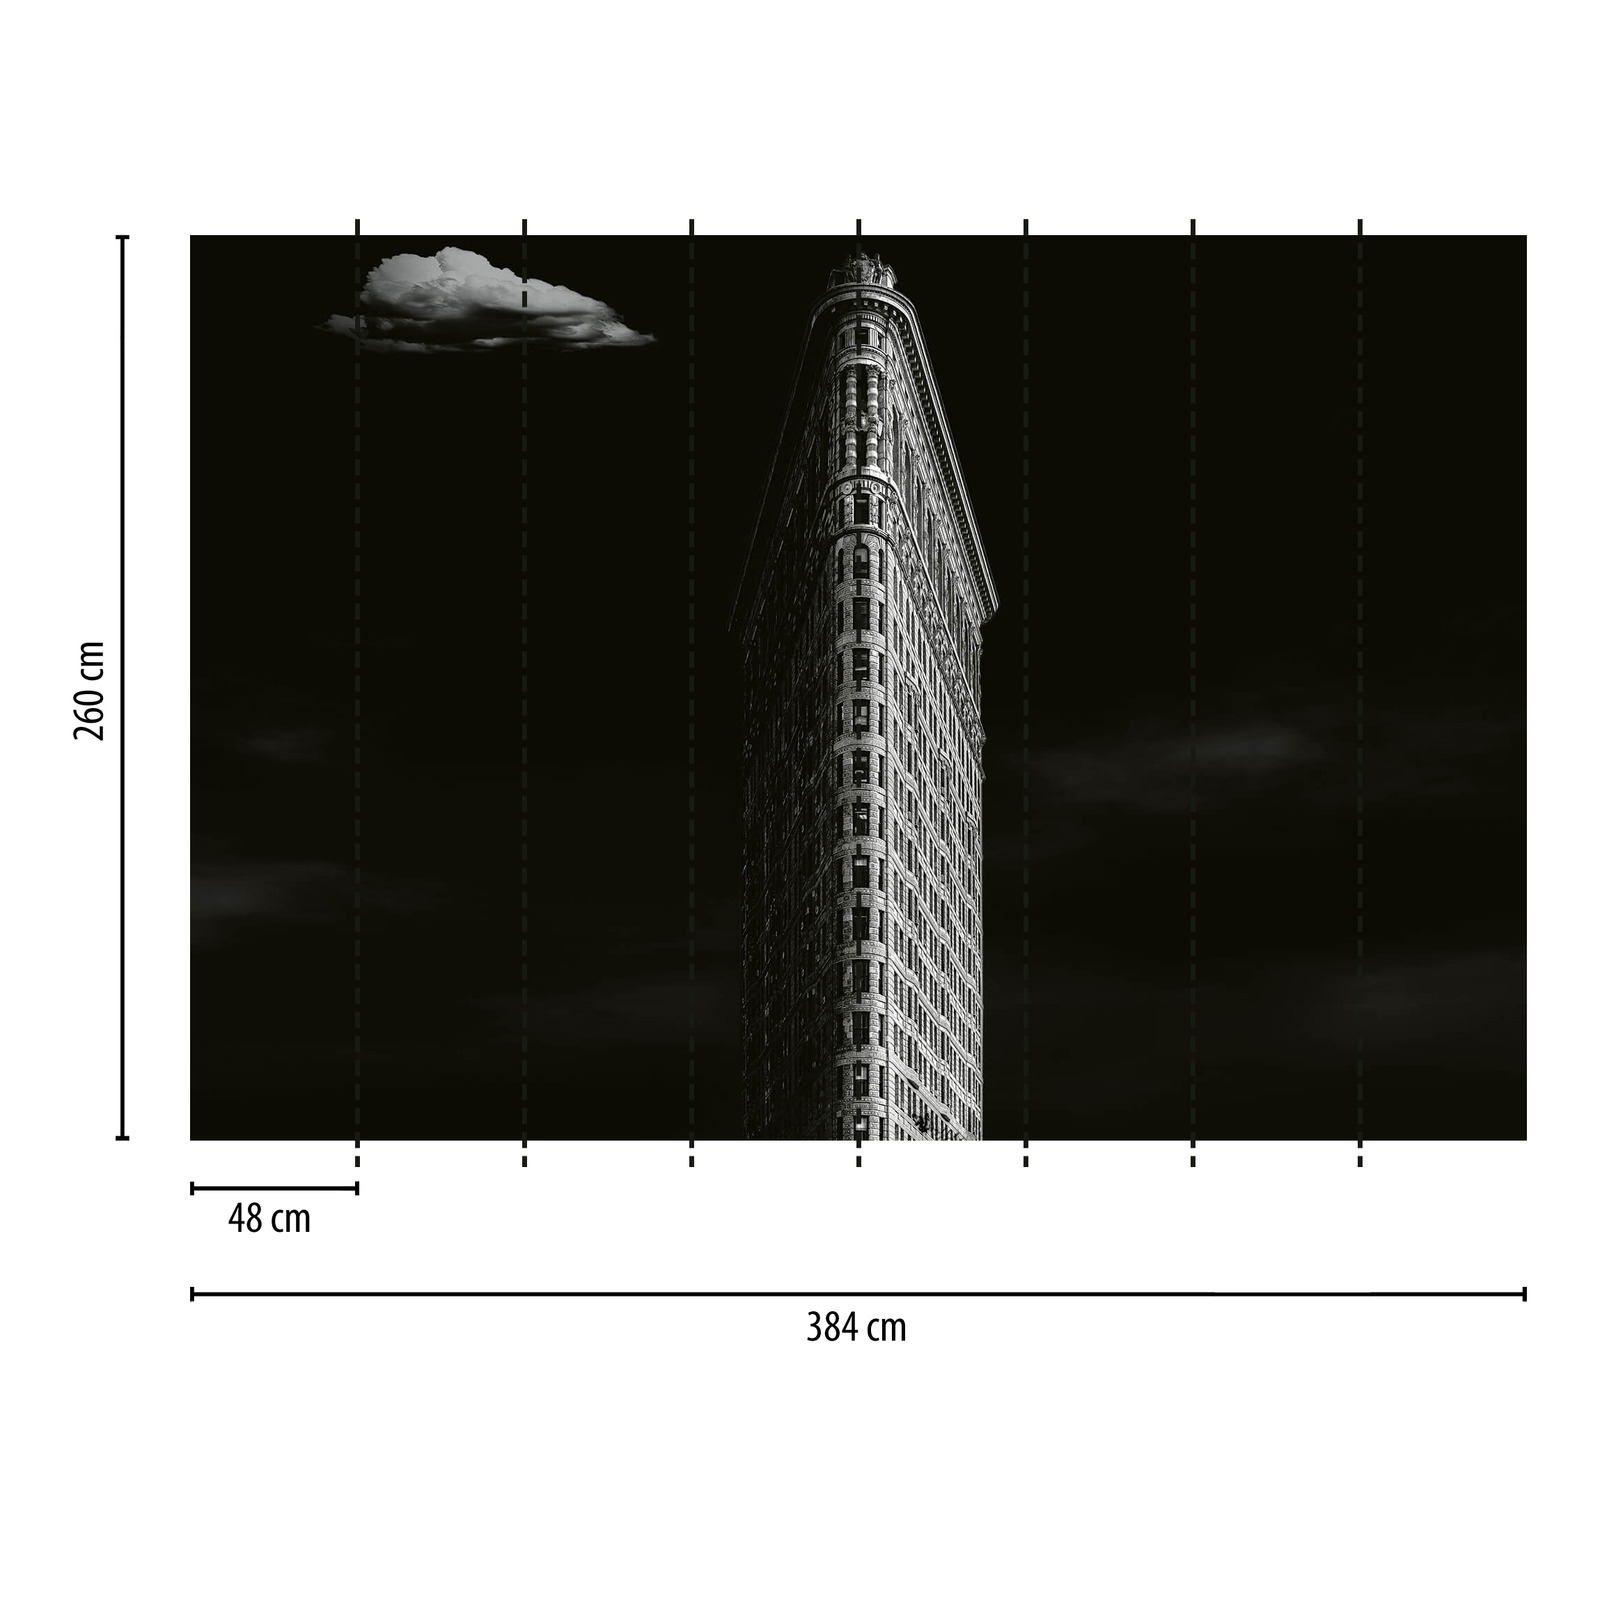             Photo wallpaper skyscraper in New York - black, white, grey
        